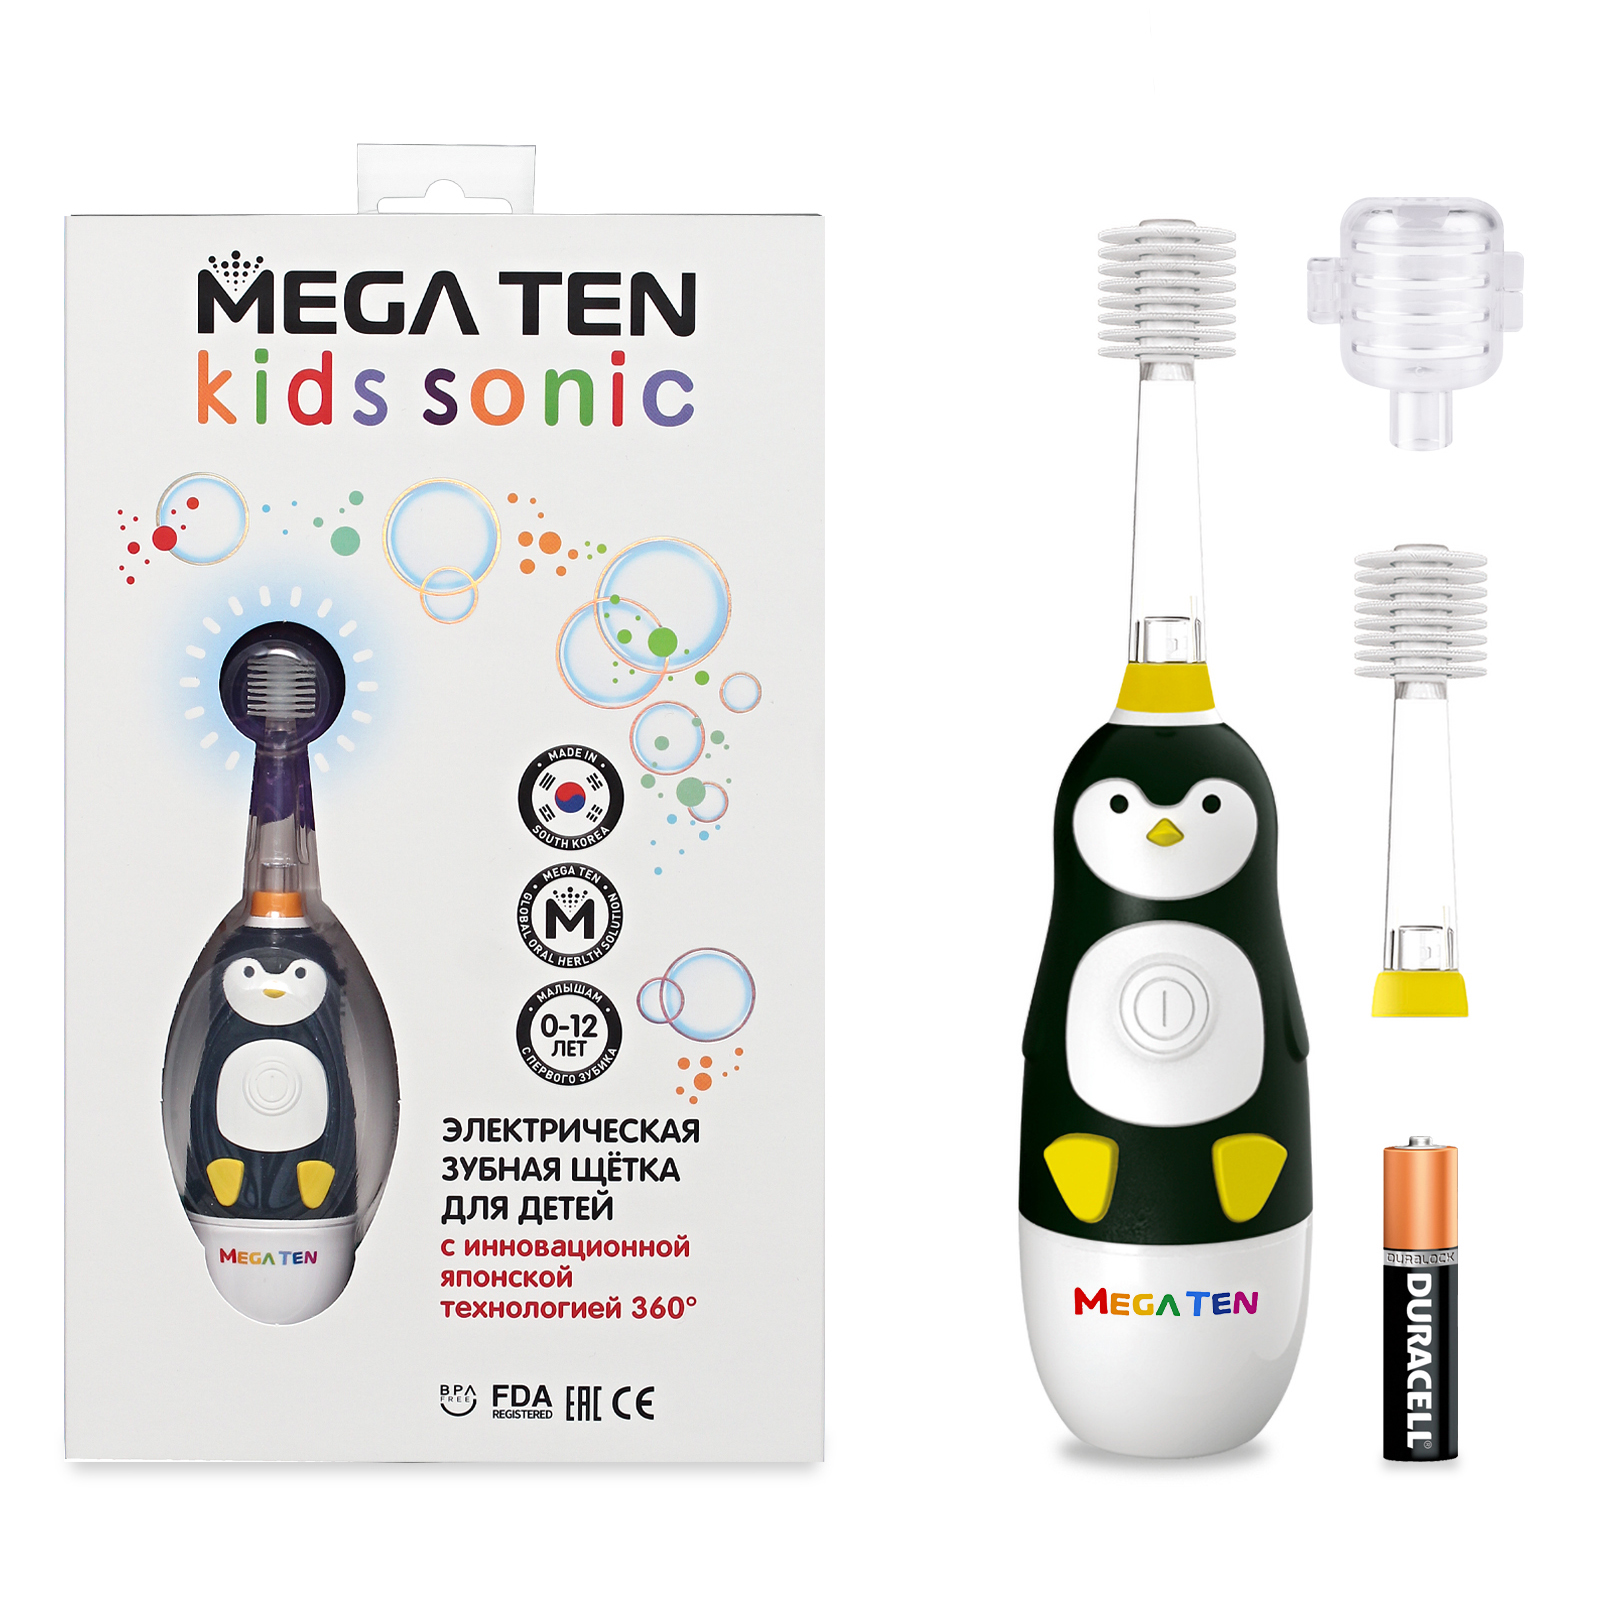 фото Зубная щетка mega ten пингвиненок в наборе mega ten kids sonic 111-mks026